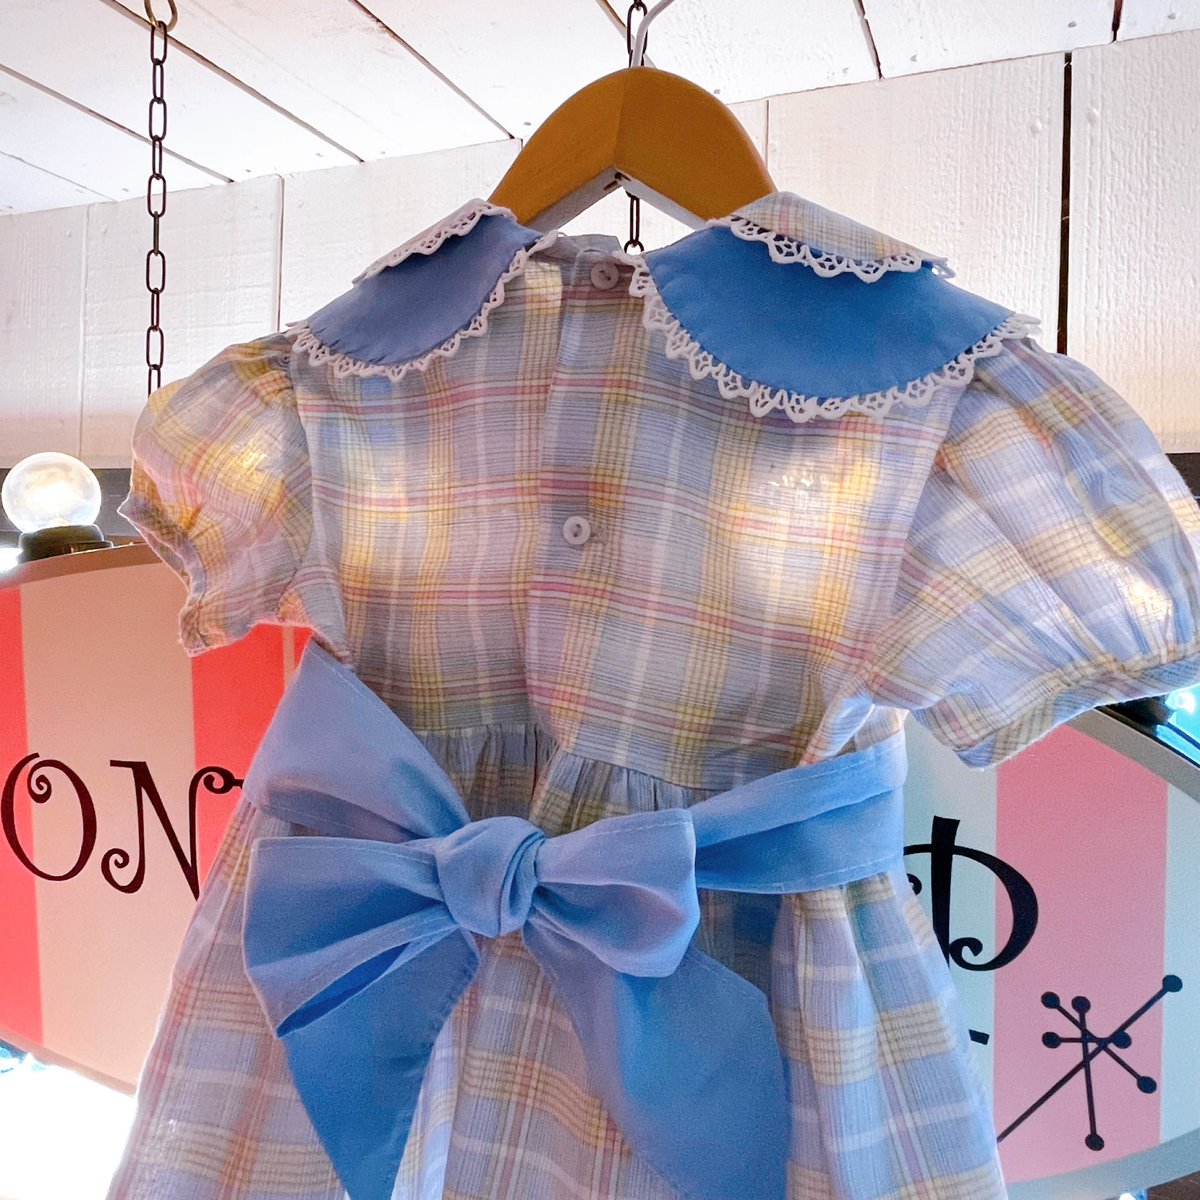 💙🧵🪡🧵🪡🧵💙
『”Patricia Ann” 1950’s Girls Dress 』
honey-bop.com/?mode=cate&cbi…
💙🧵🪡🧵🪡🧵💙

🌼HONEY BOP🌼
〒460-0011
愛知県名古屋市中区大須2-7-46-2F
📞 052-253-6637
📩 honey_bop@opal.plala.or.jp
🛒 honey-bop.com
#honeybop #vintage #vintagekids #vintagekidsclothes